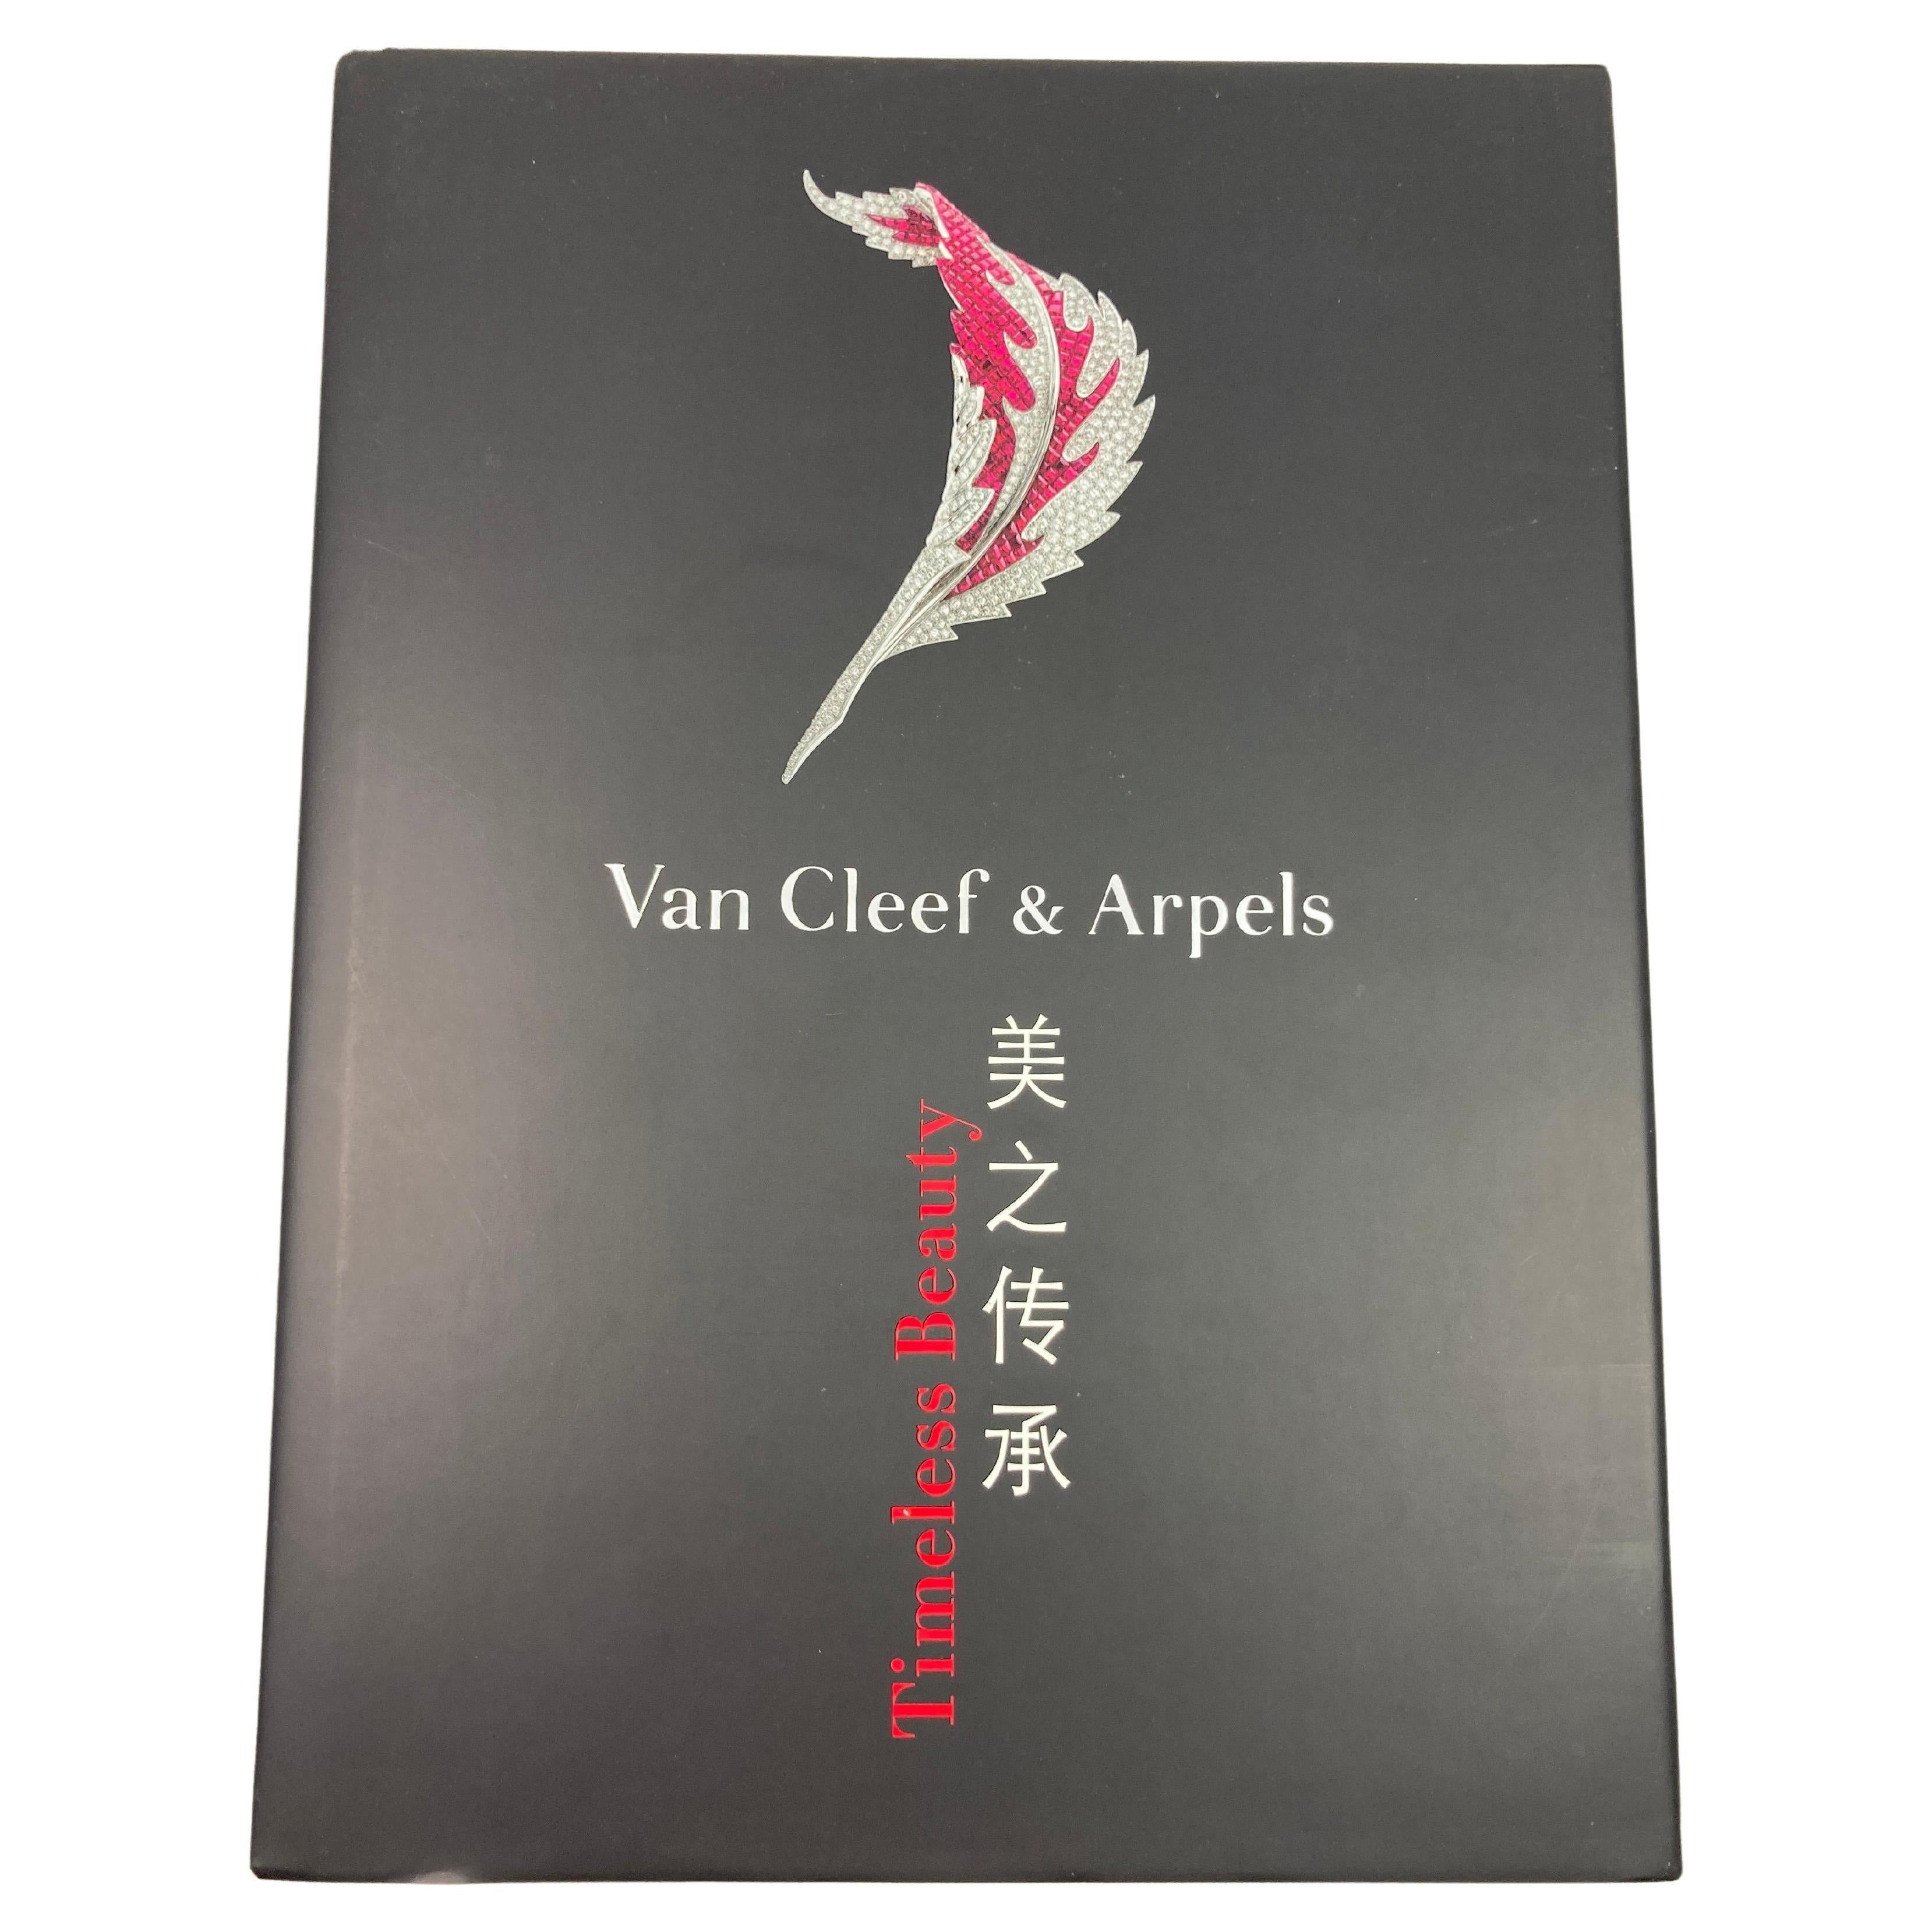 Black Van Cleef & Arpels: Timeless Beauty Hardcover Book 2012 For Sale